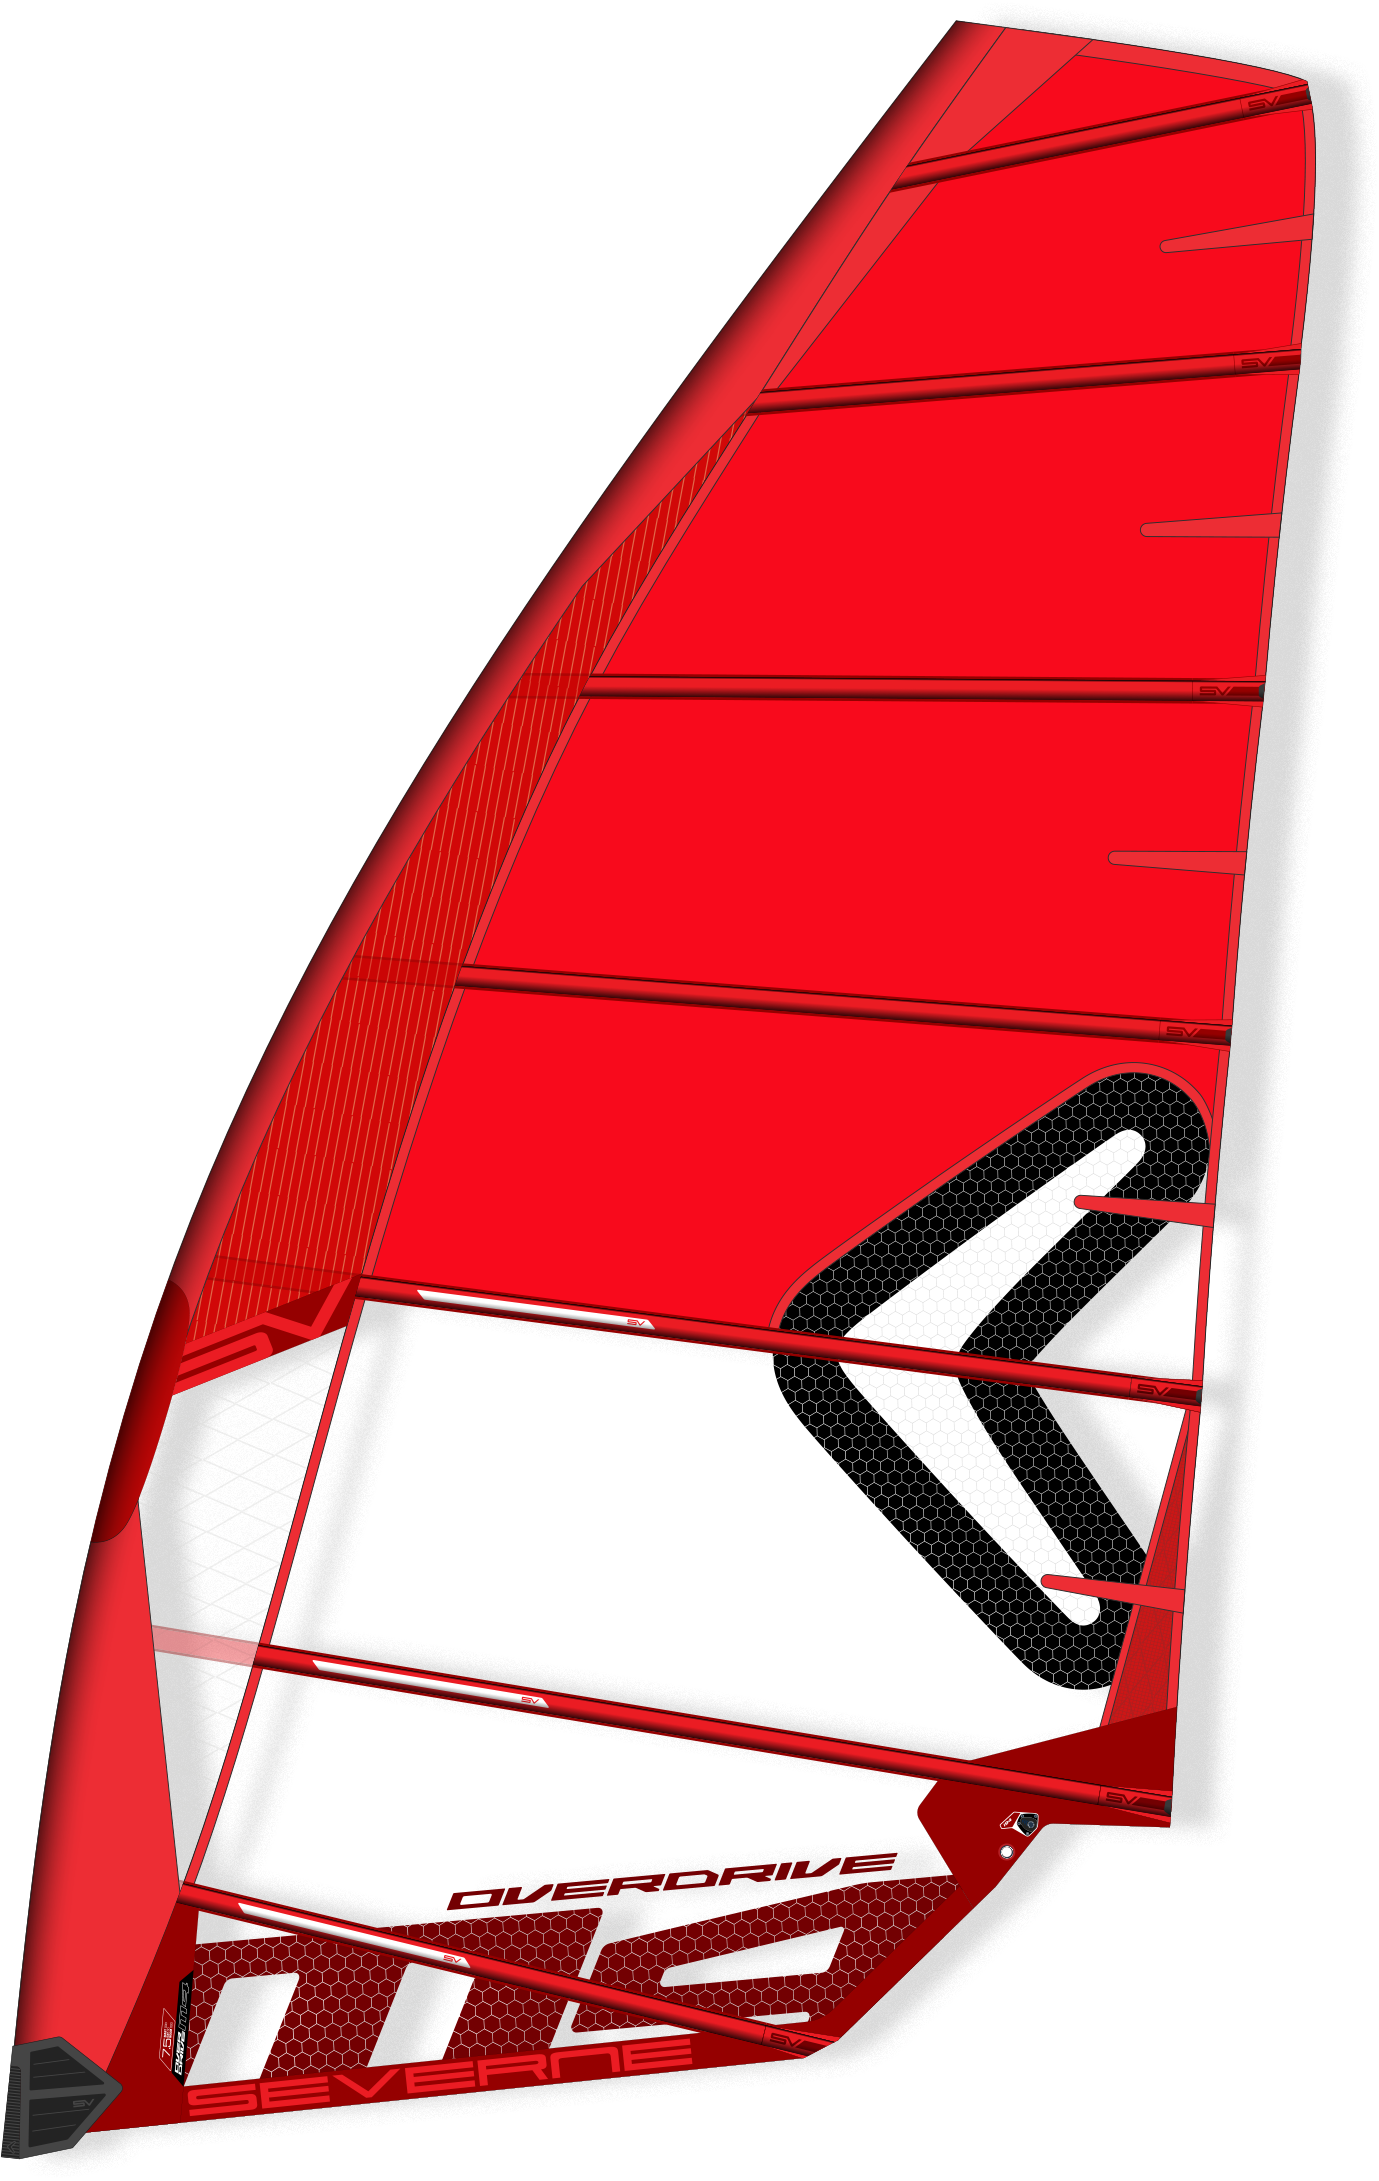 Severne Overdrive M4 Windsurfsegel 22 Race Segel Sail Surf, Segelgröße in m2: 5.5